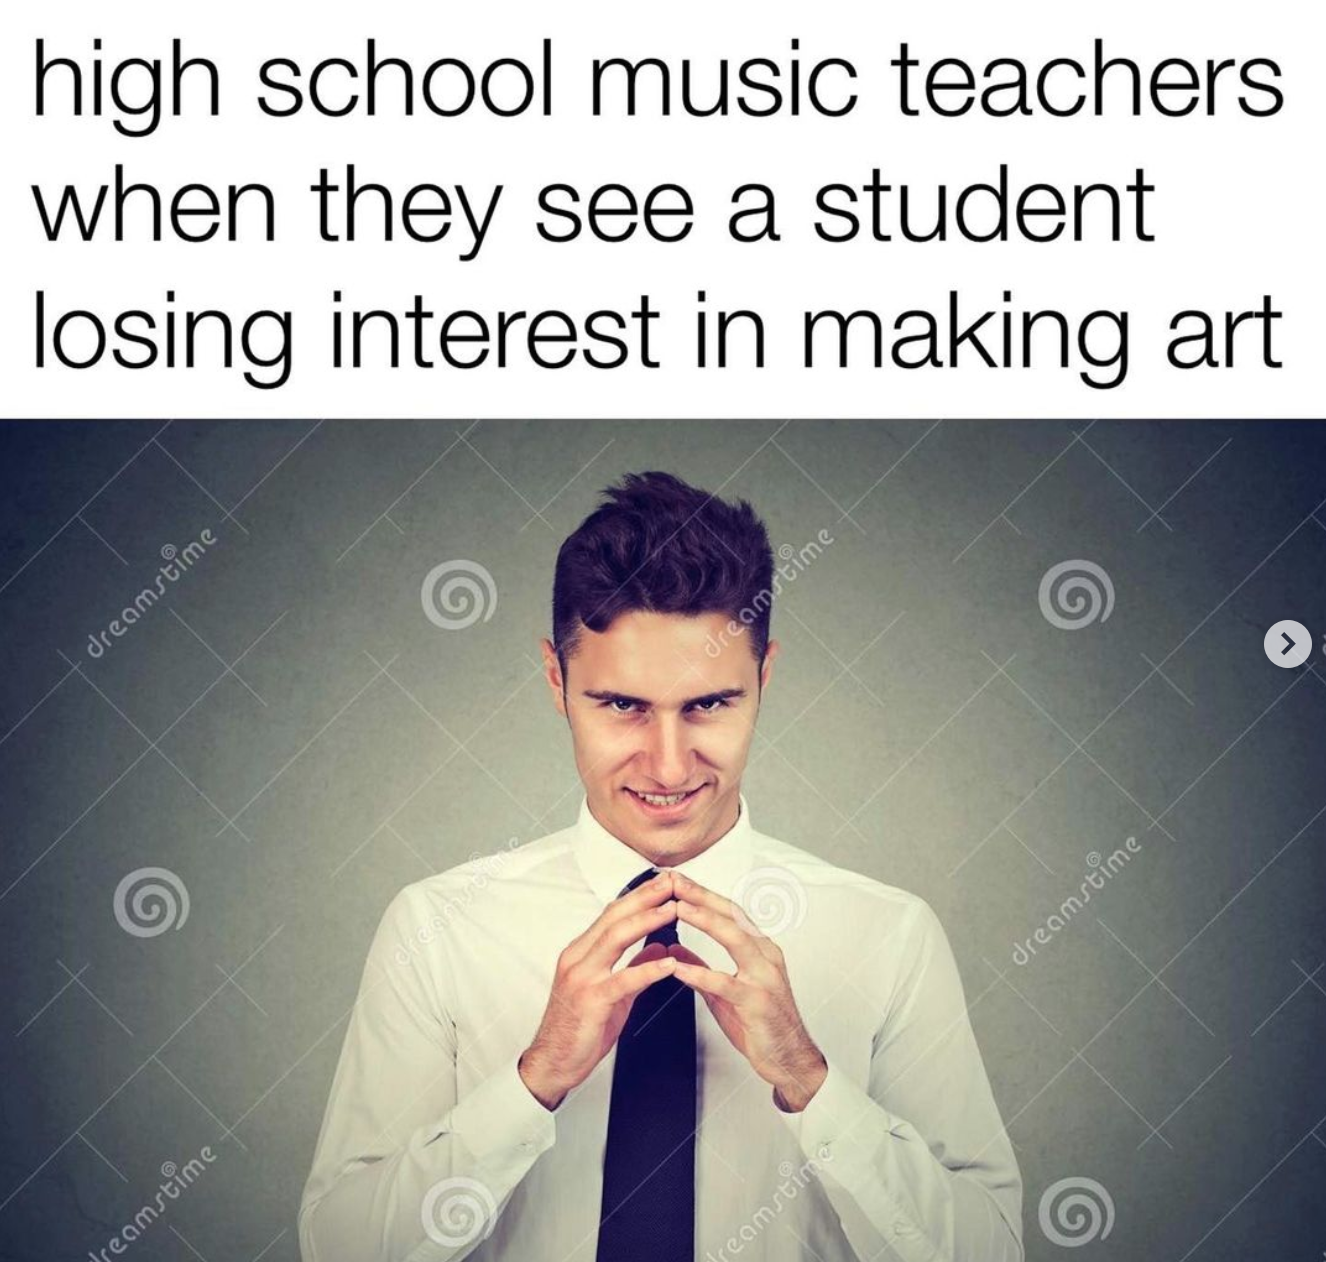 For The Music Teachers